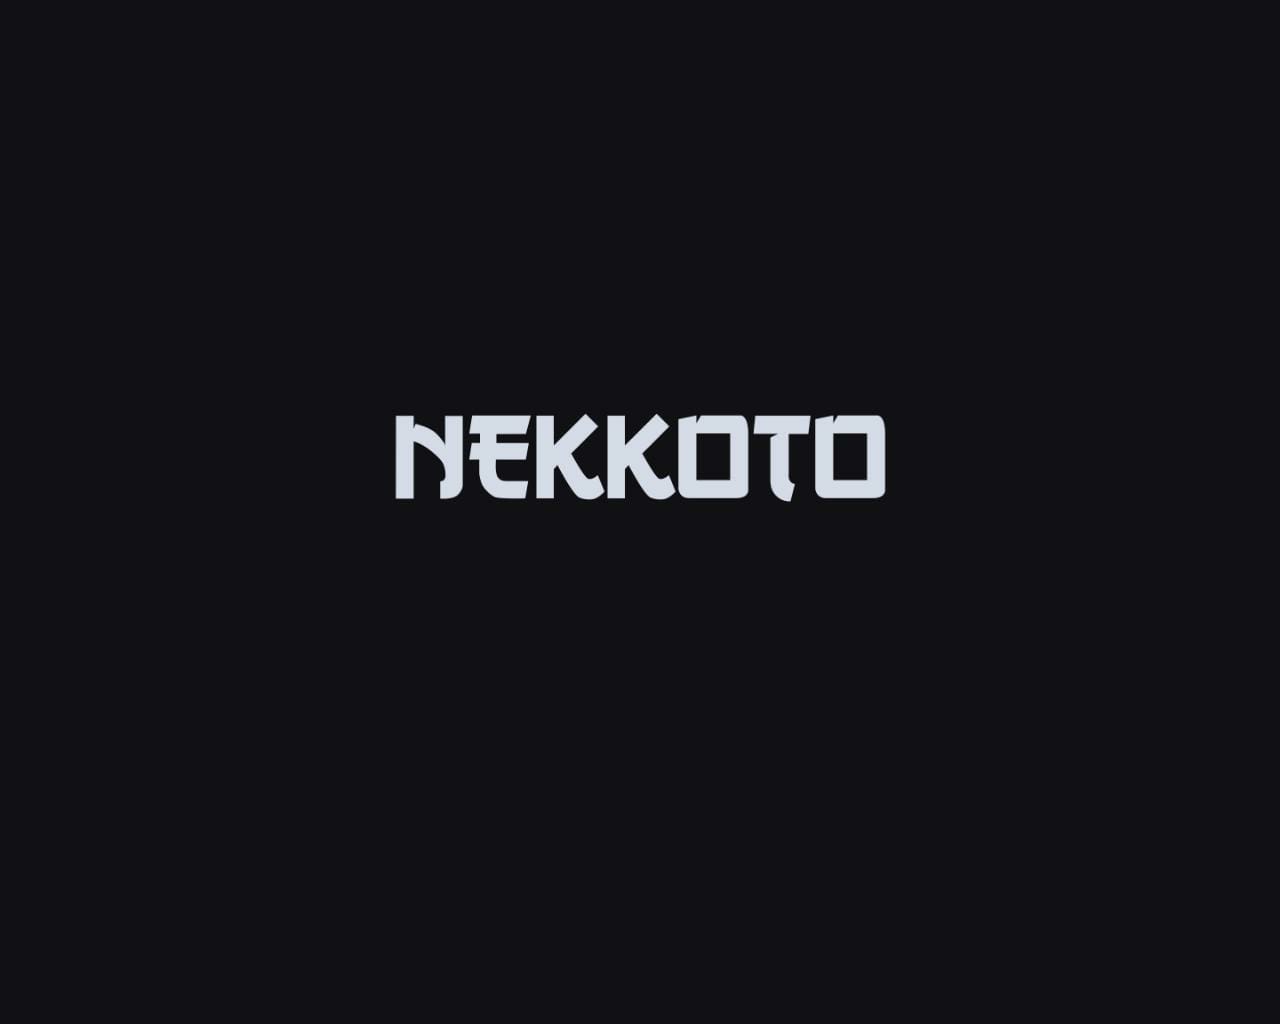 Nekkoto APK Download on Android [Aniko Invite]